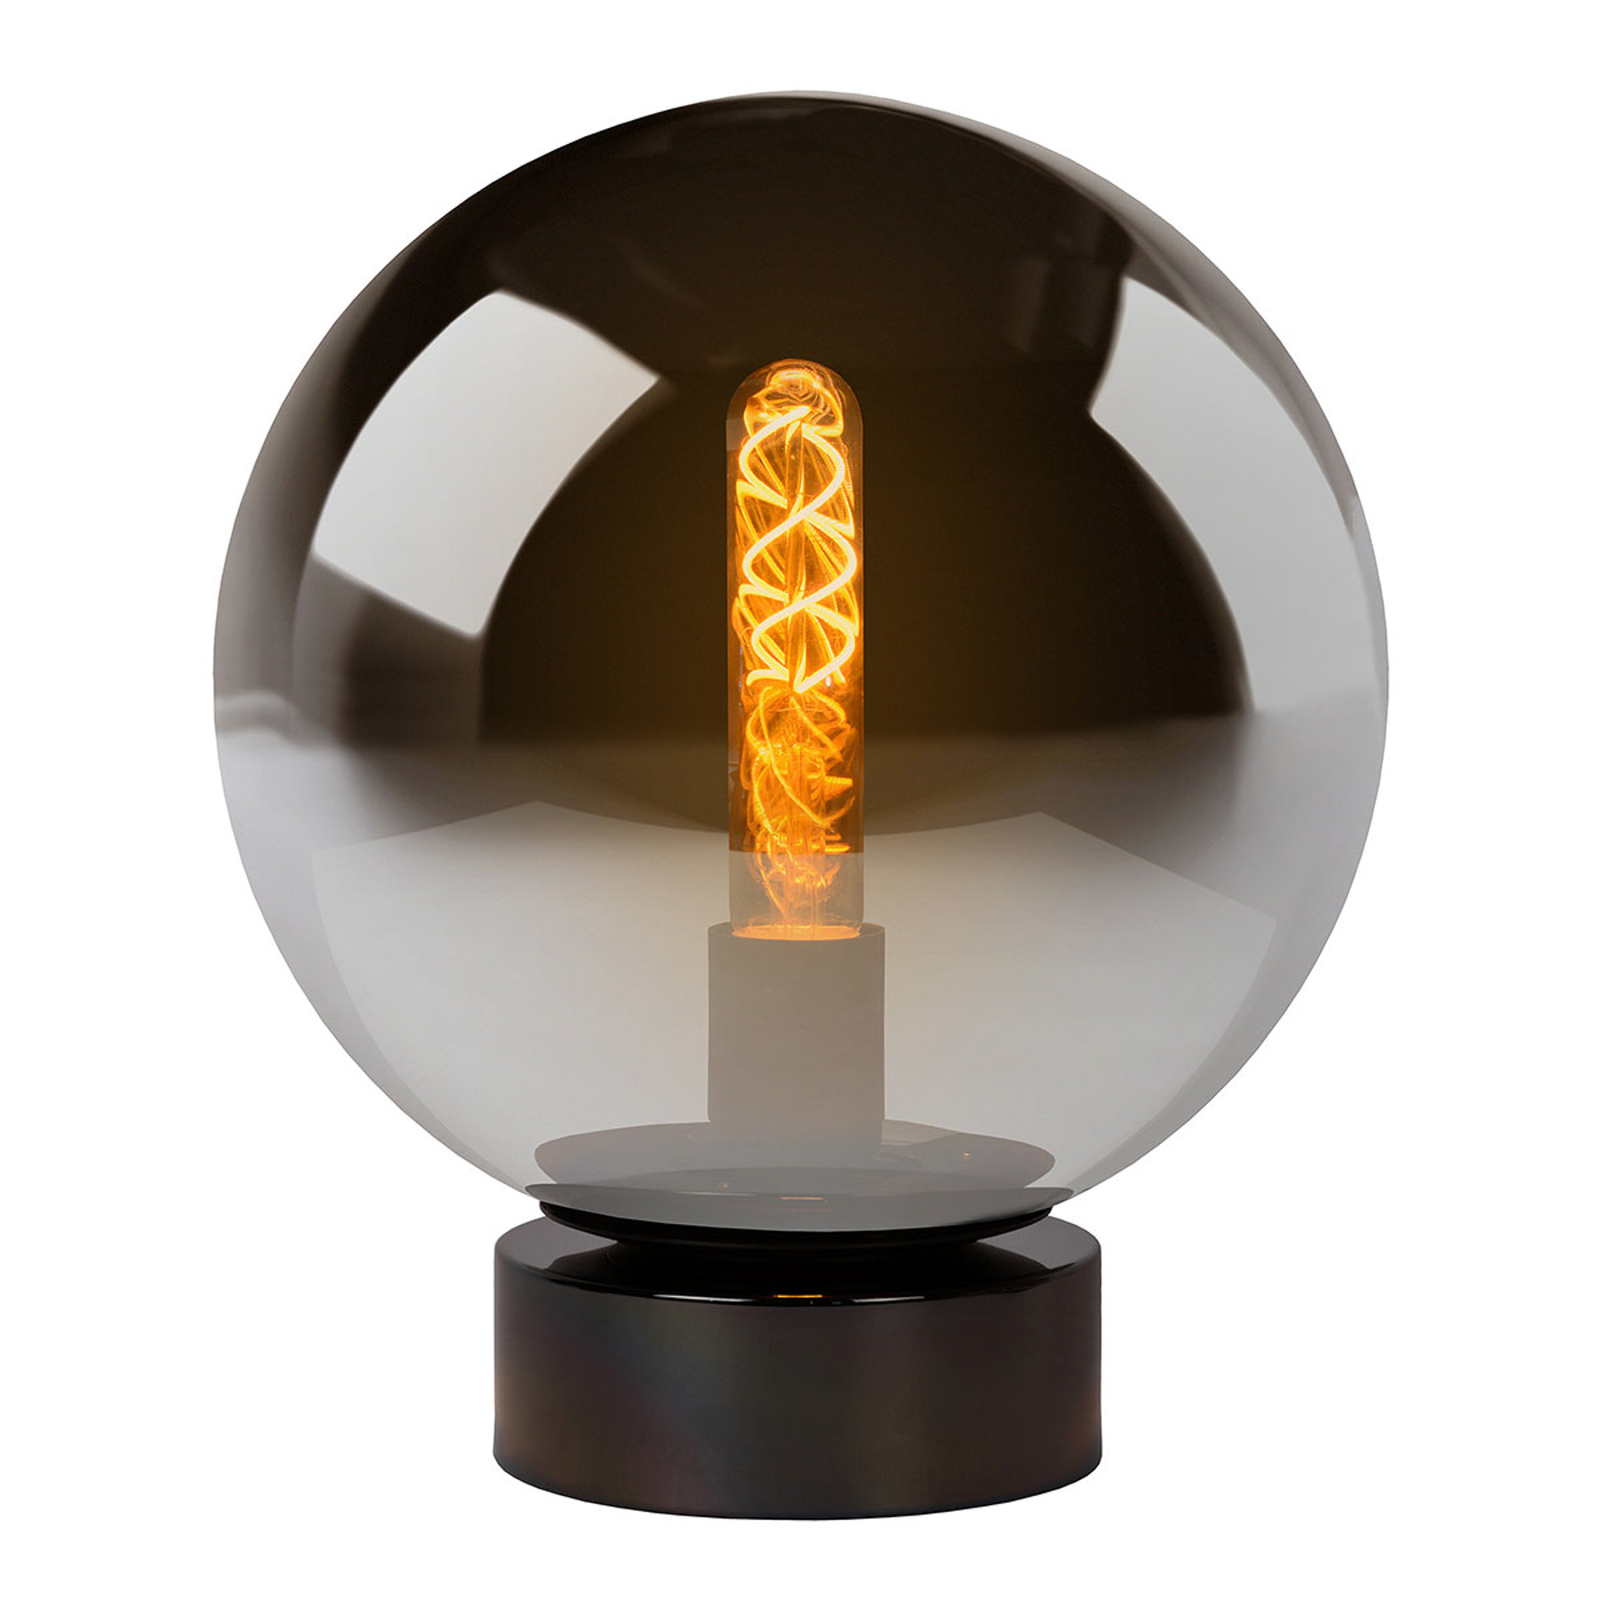 Jorit bordlampe i glass i sfærisk form, 25 cm